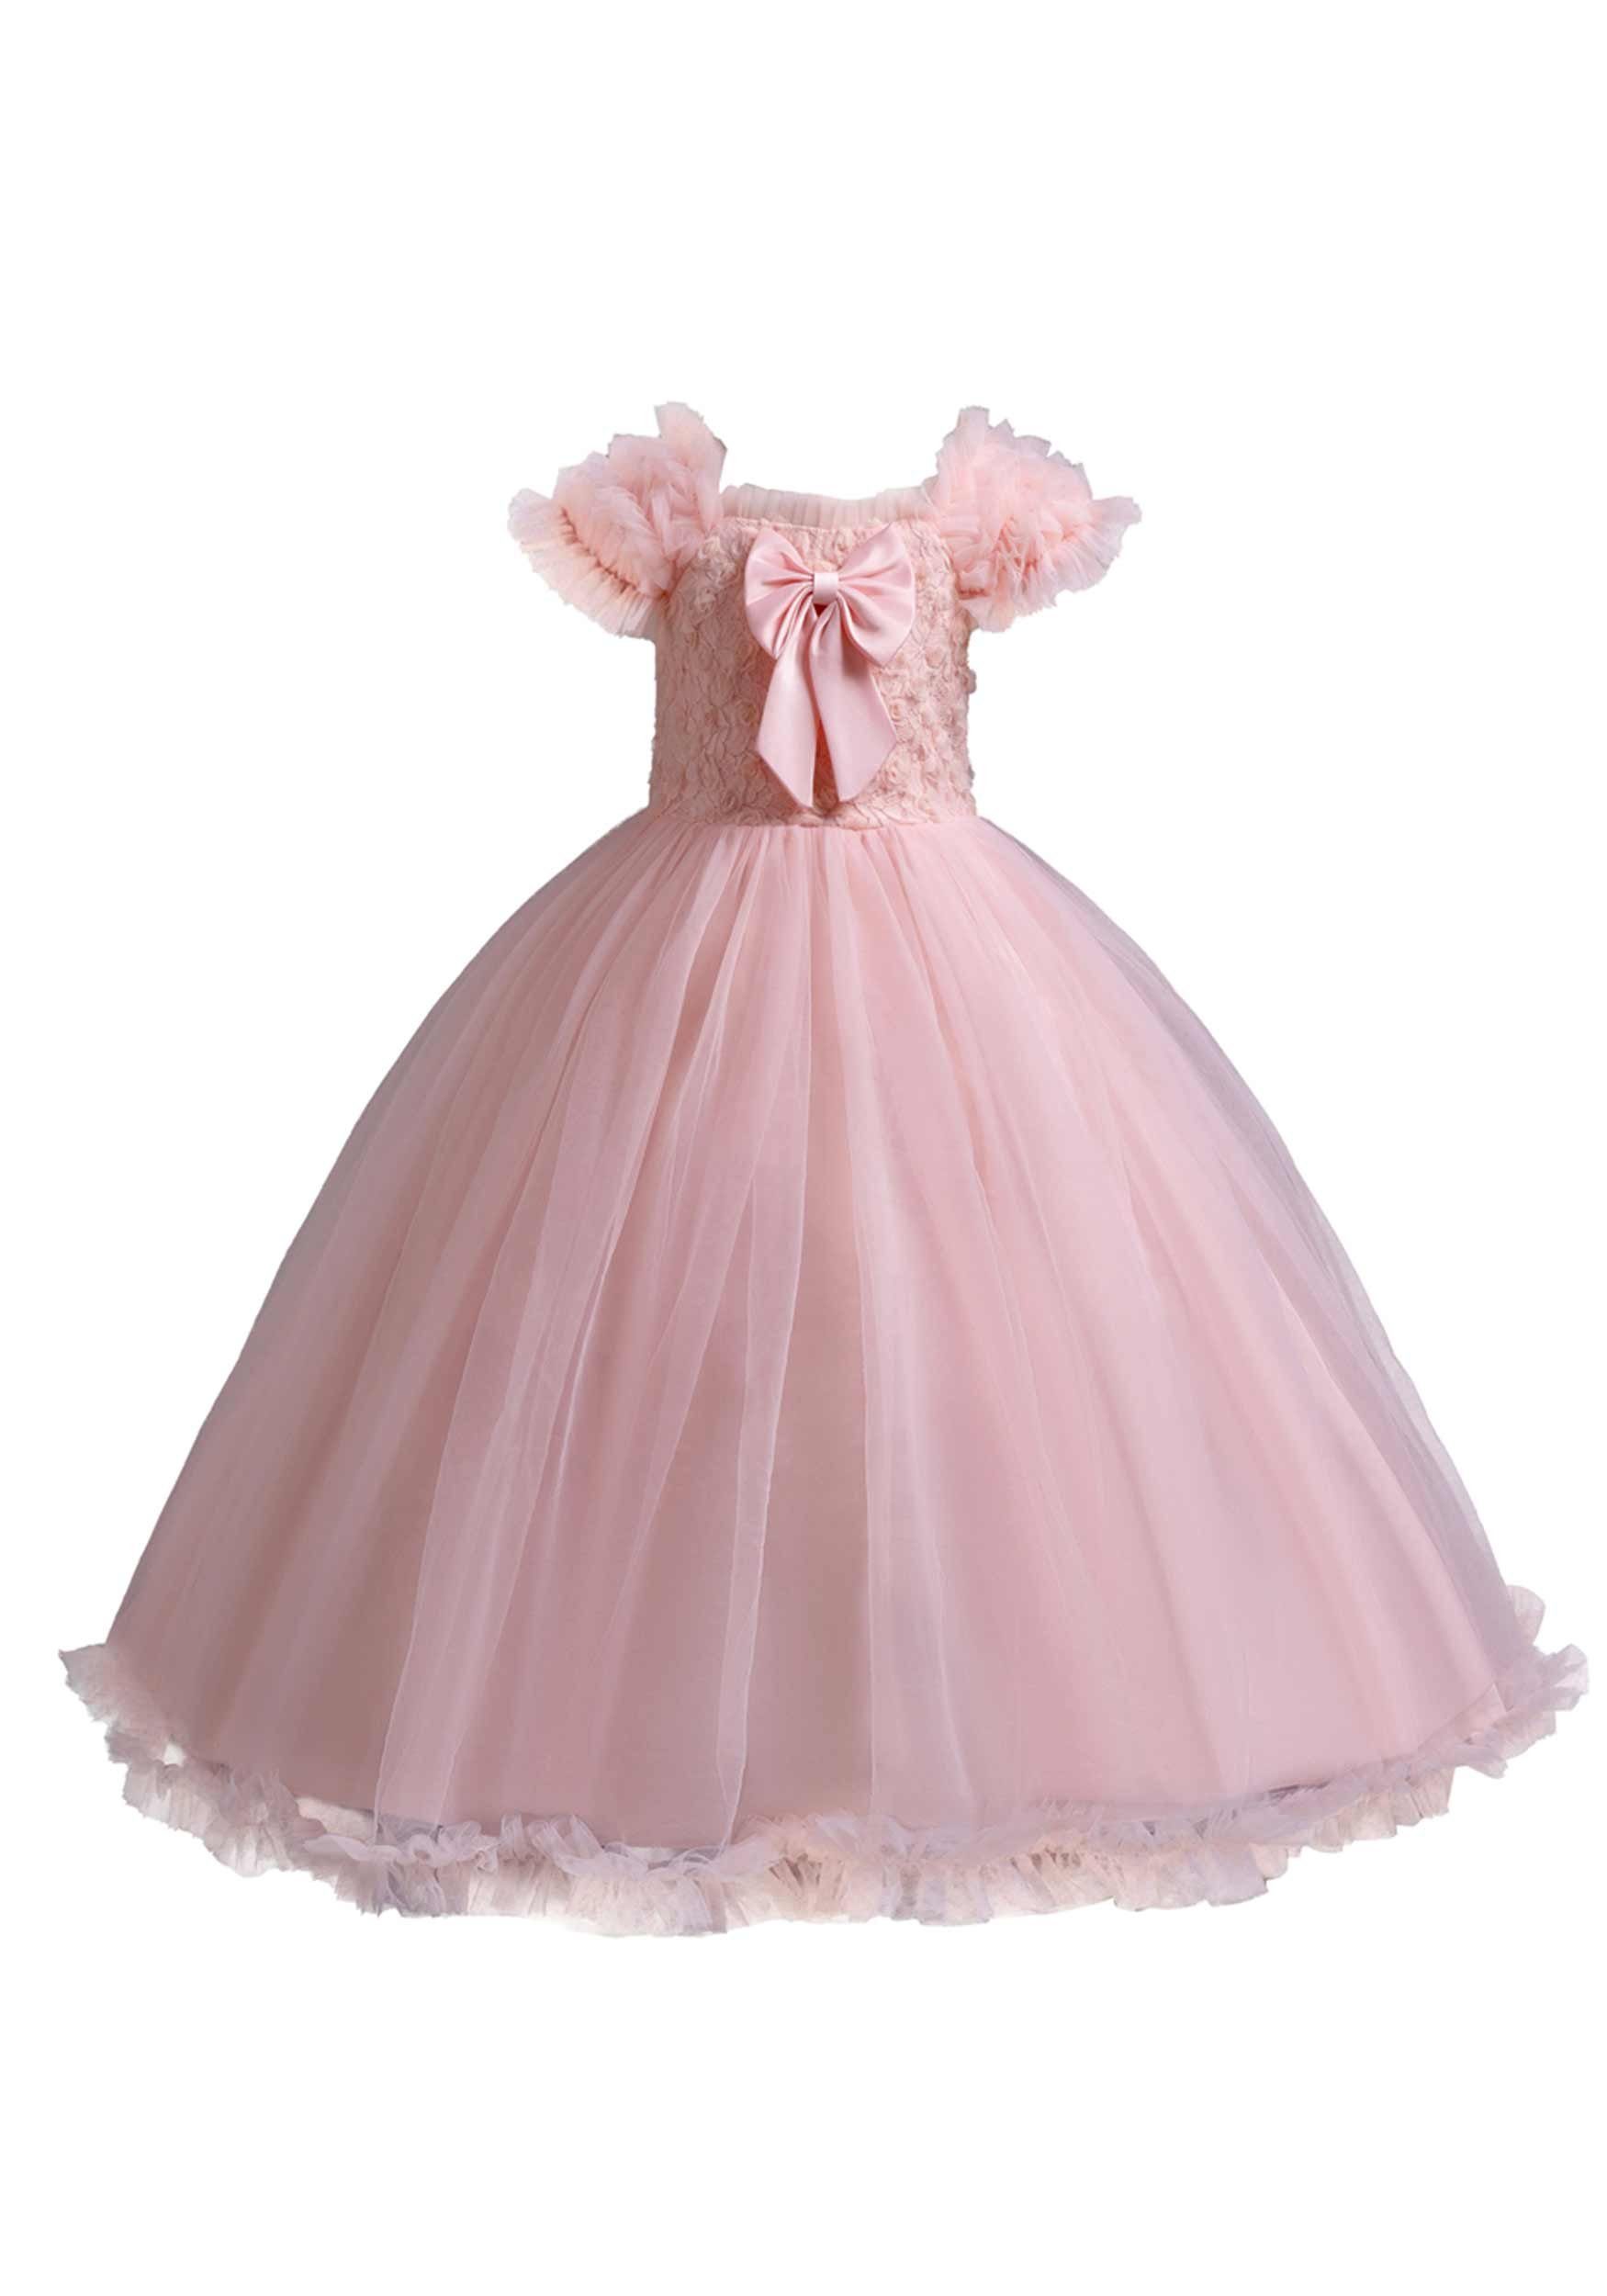 Daisred Kinderkleider Ballkleid Abendkleider Tüllkleid Rosa Prinzessinnenkleider